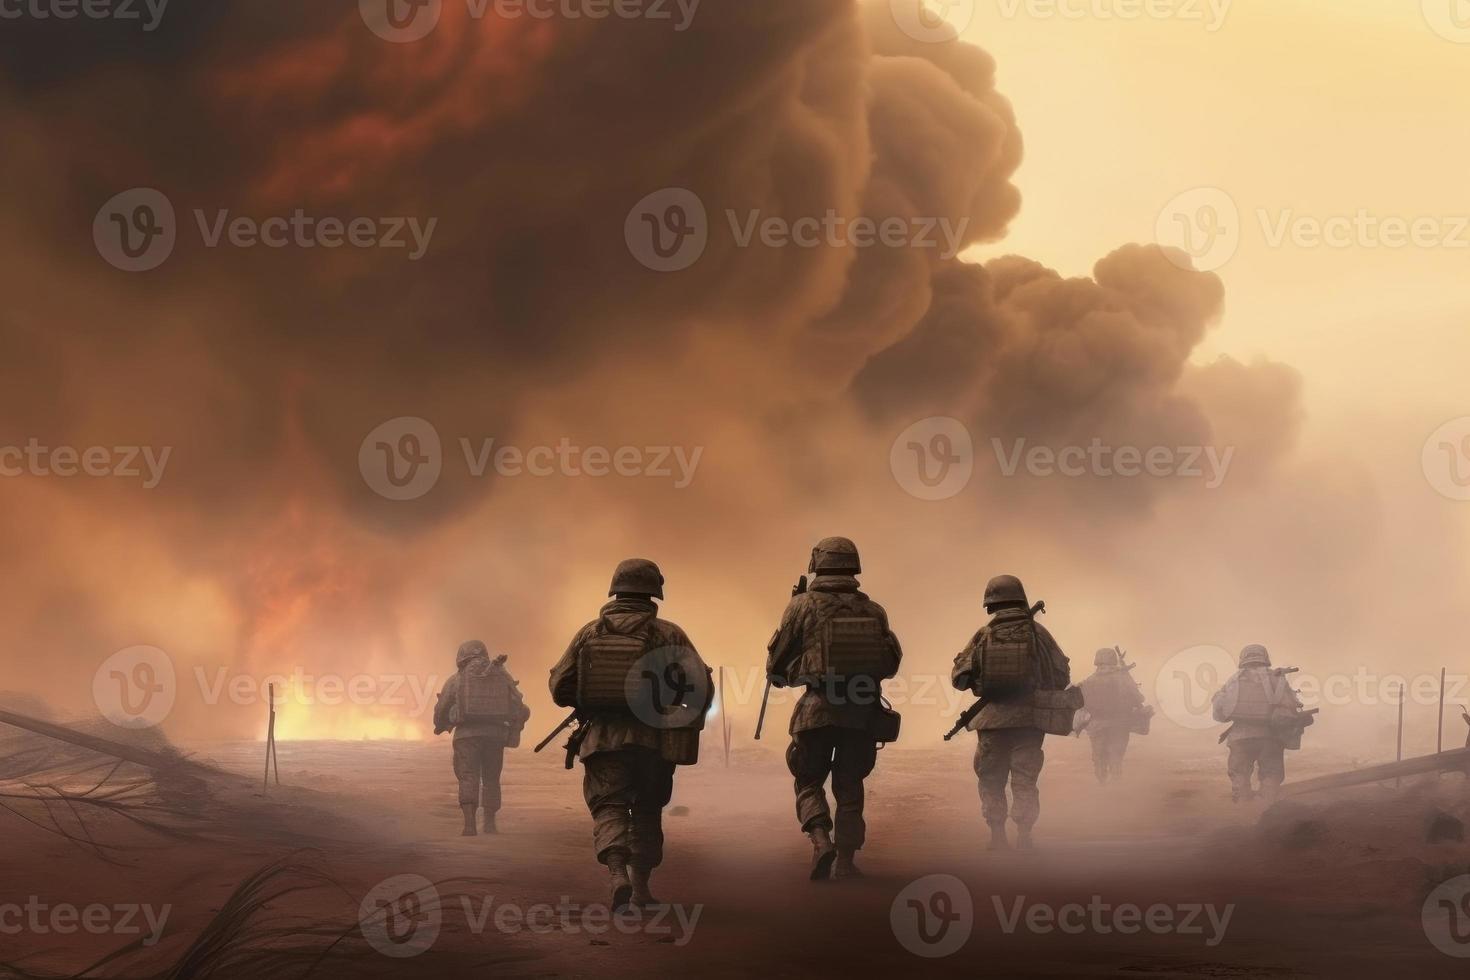 oorlogsgebied soldaten in rook. genereren ai foto